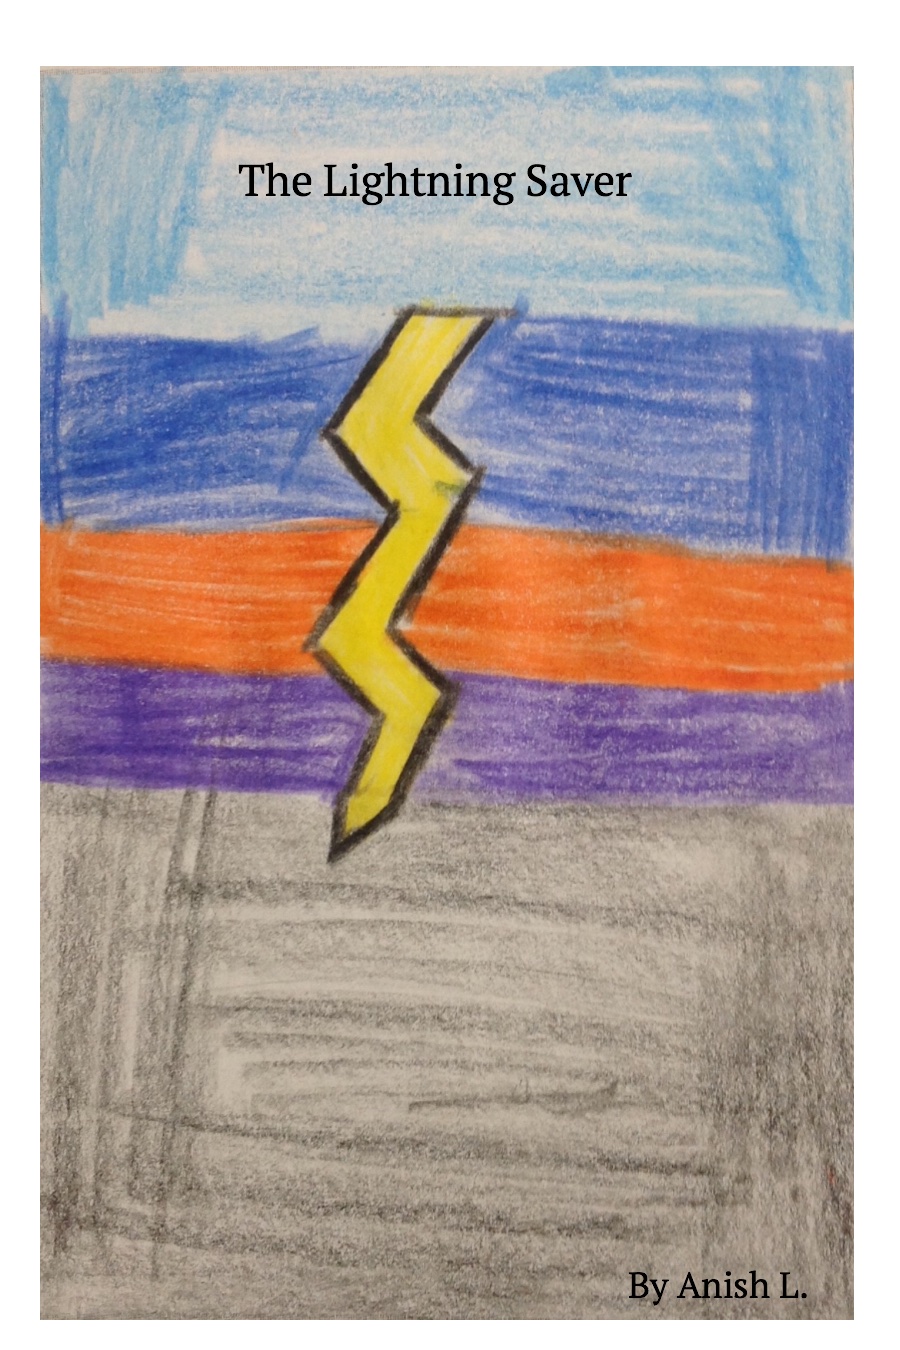 The Lightning Saver by Anish L